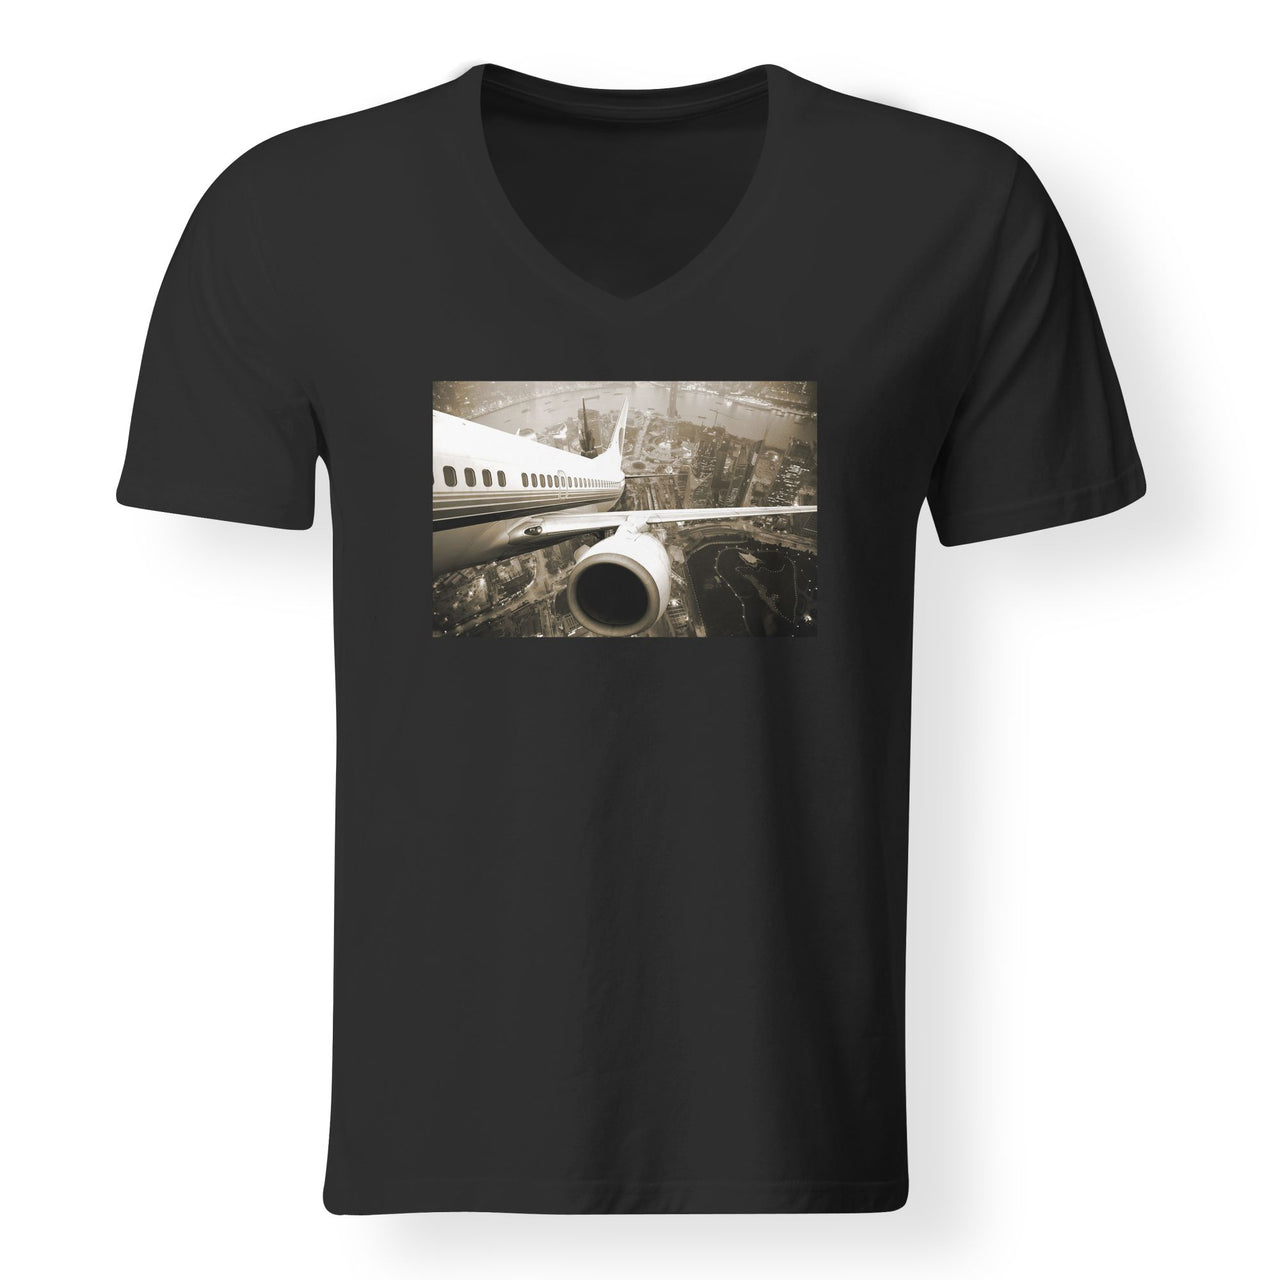 Departing Aircraft & City Scene behind Designed V-Neck T-Shirts